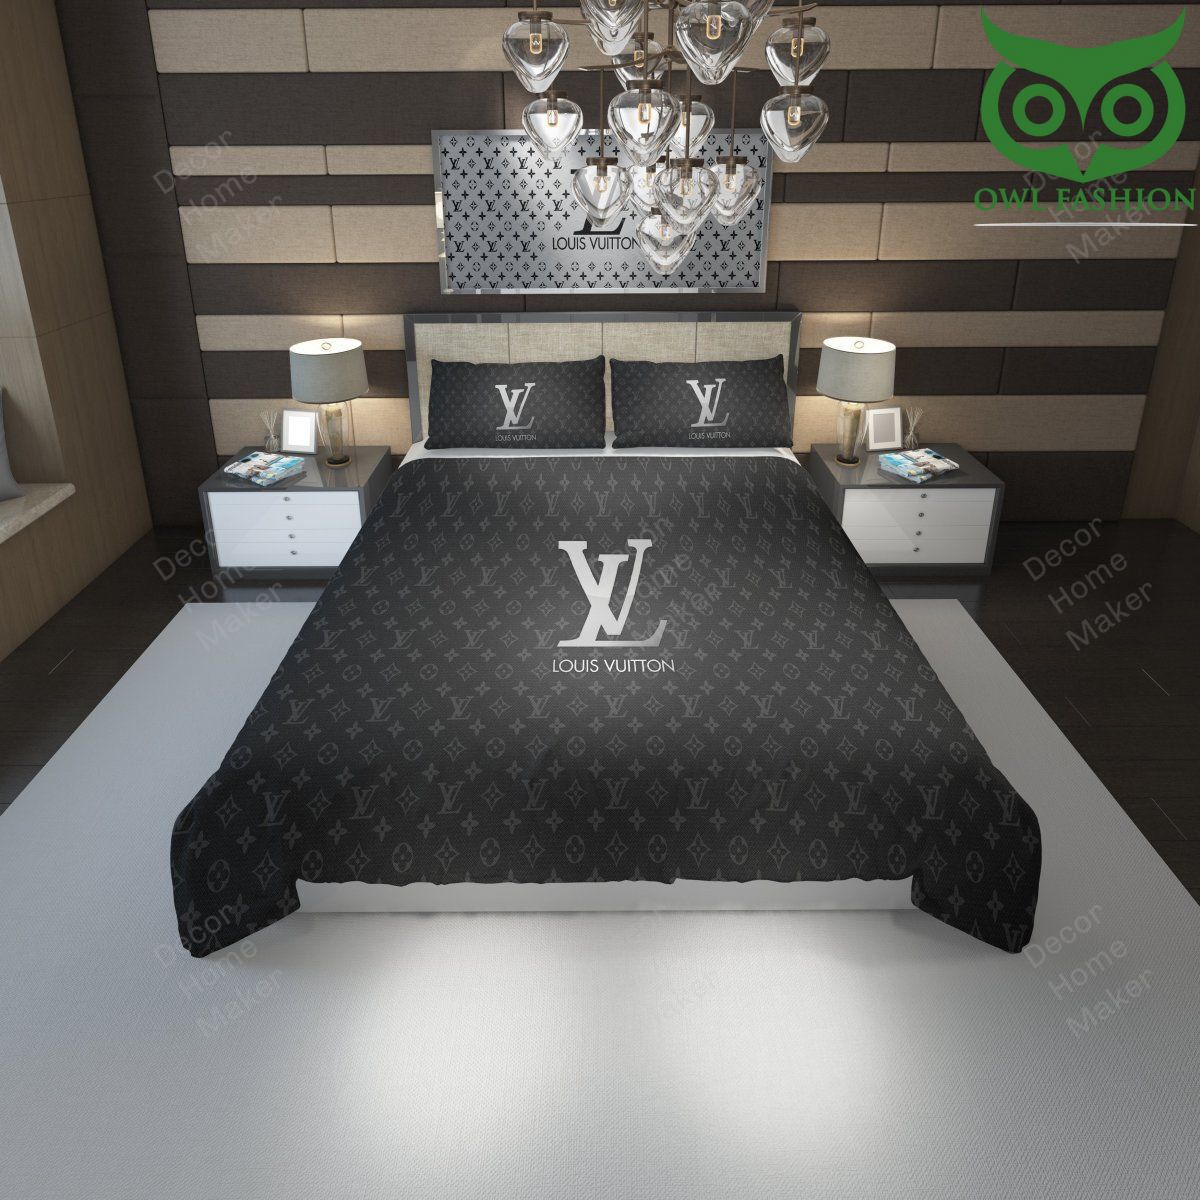 PREMIUM black Louis Vuitton bedding set